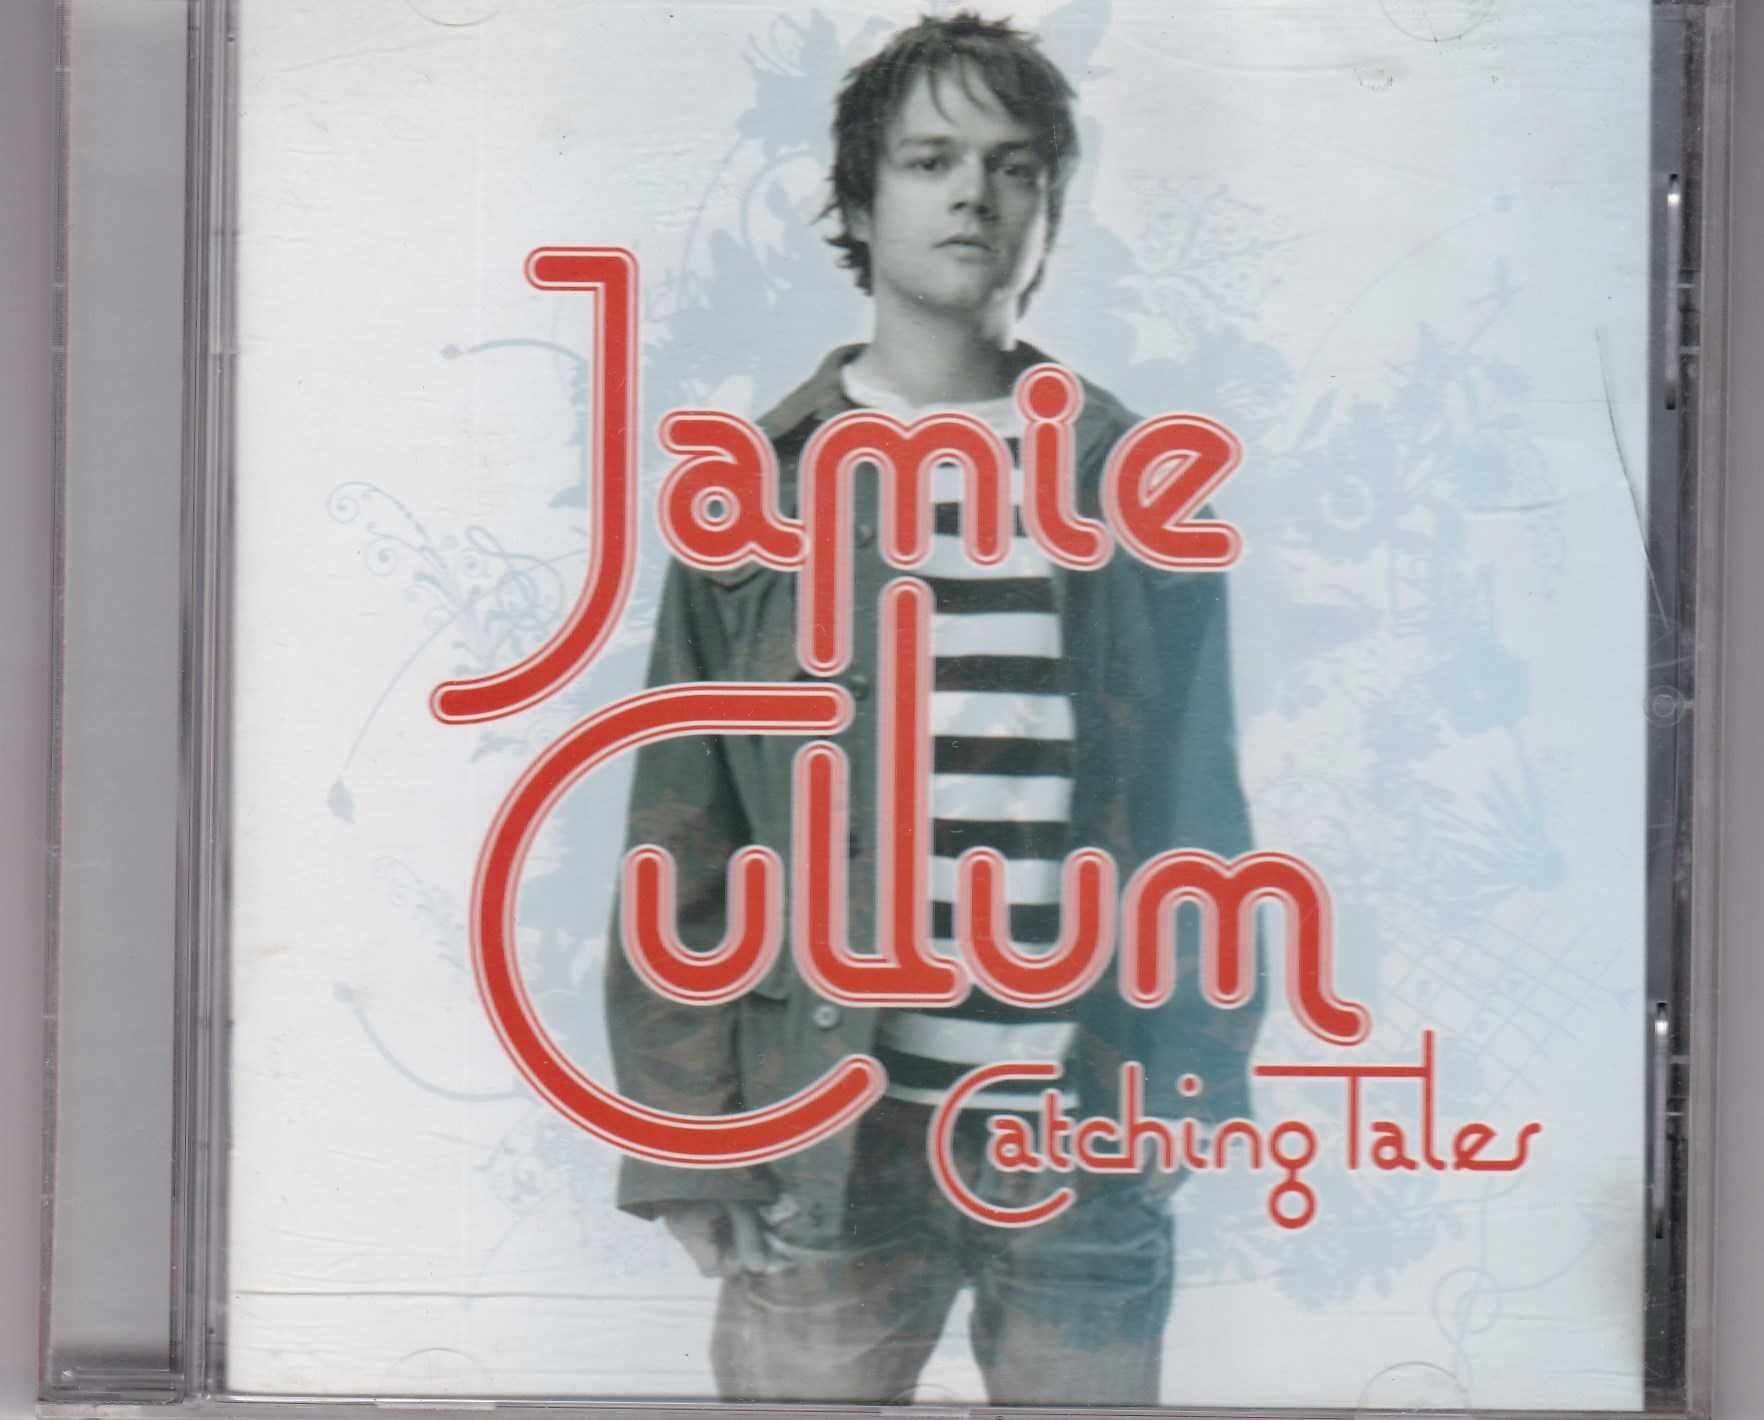 Jamie Cullum Catching Tales CD